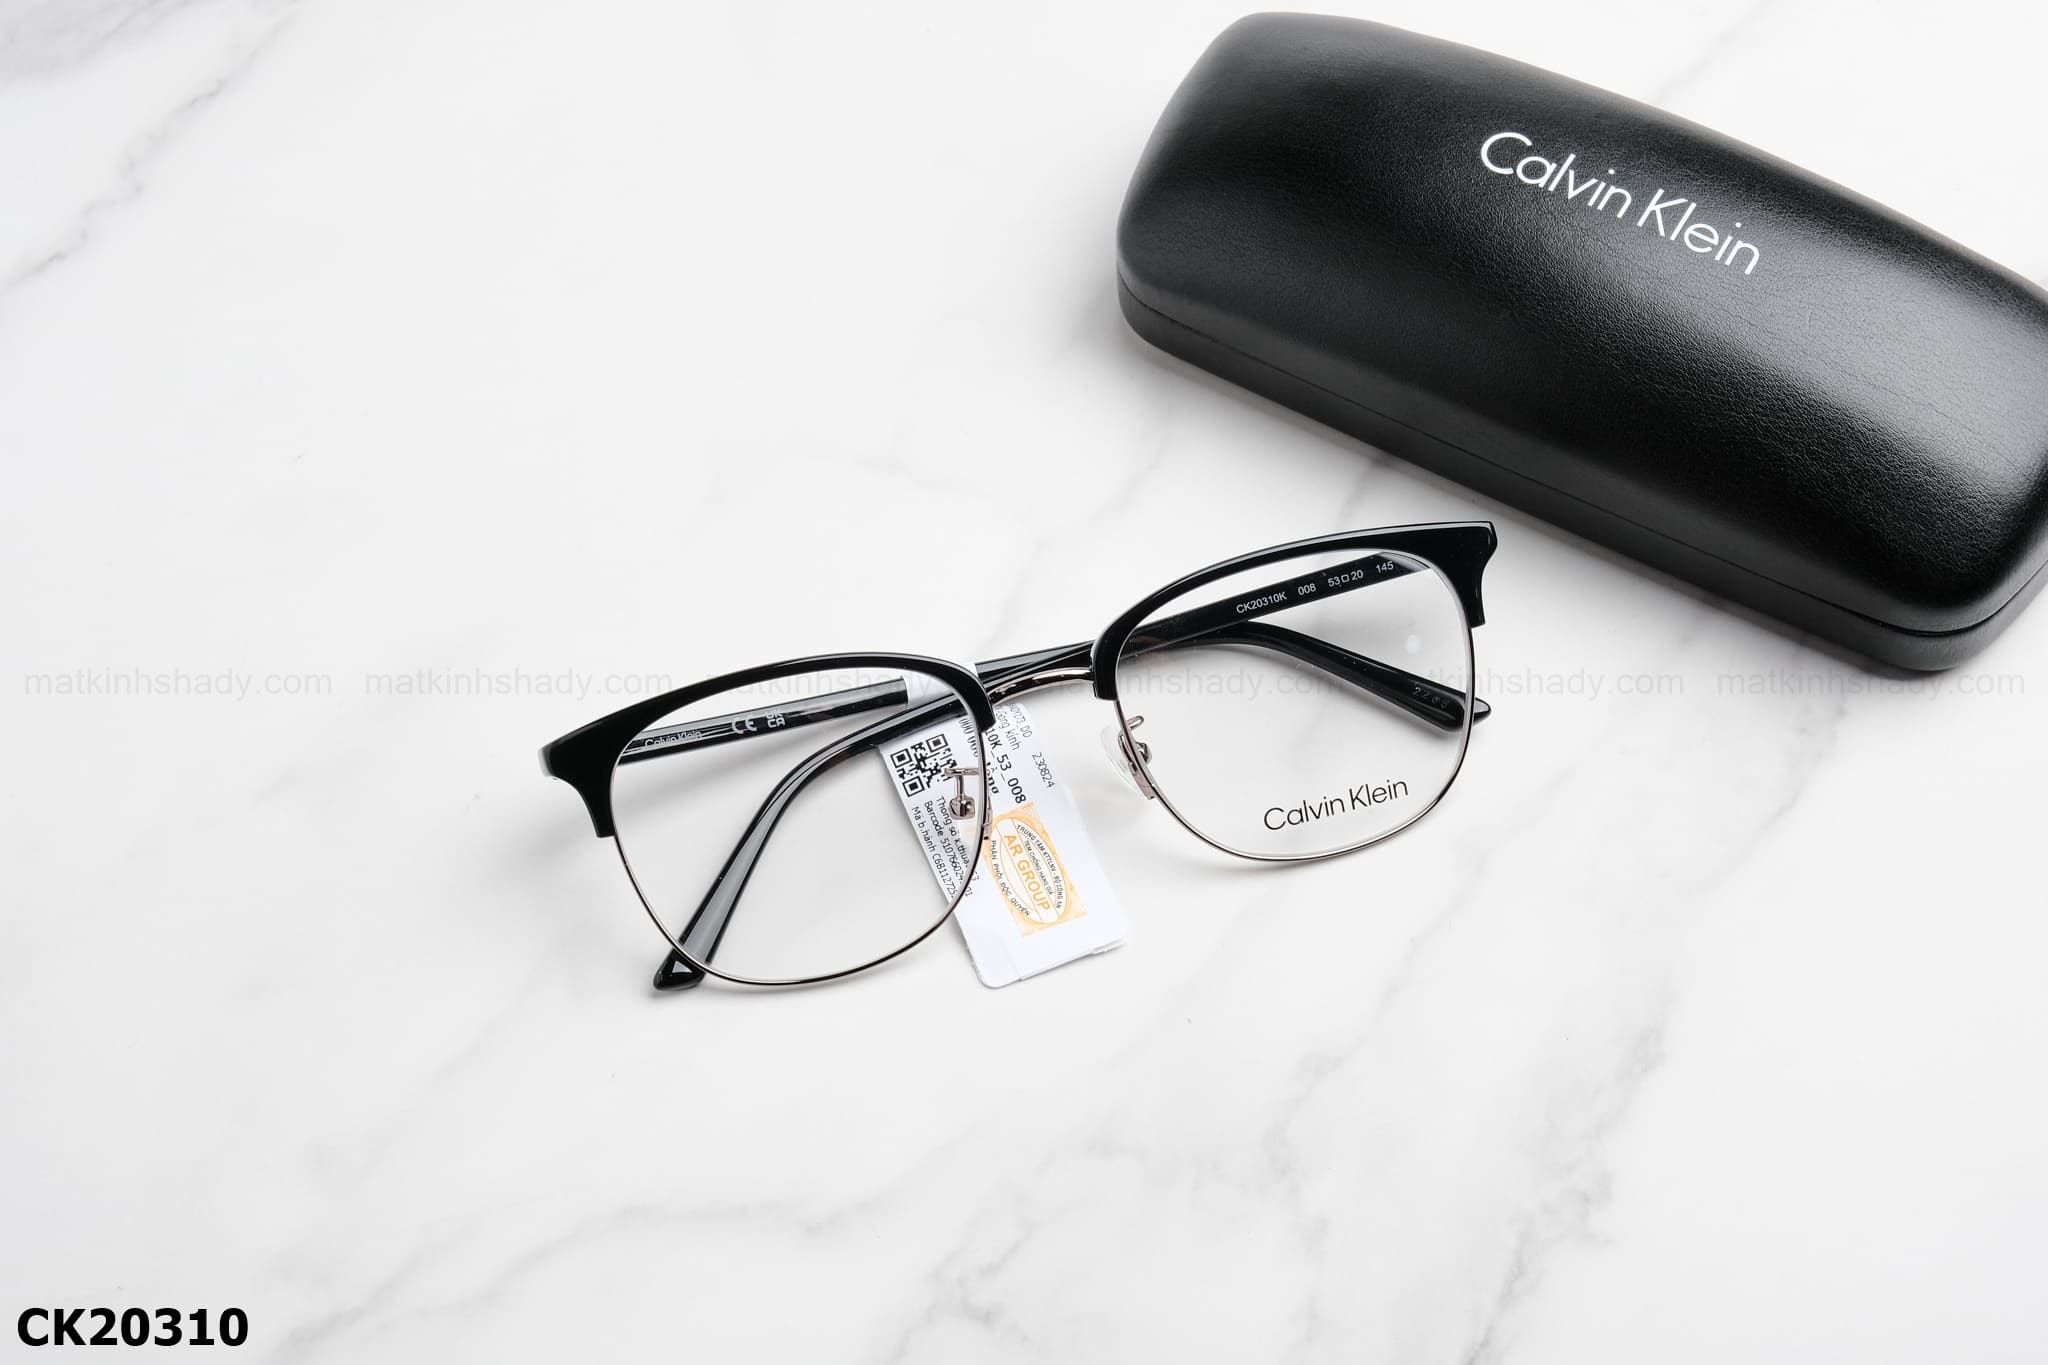  Calvin Klein Eyewear - Glasses - CK20310 